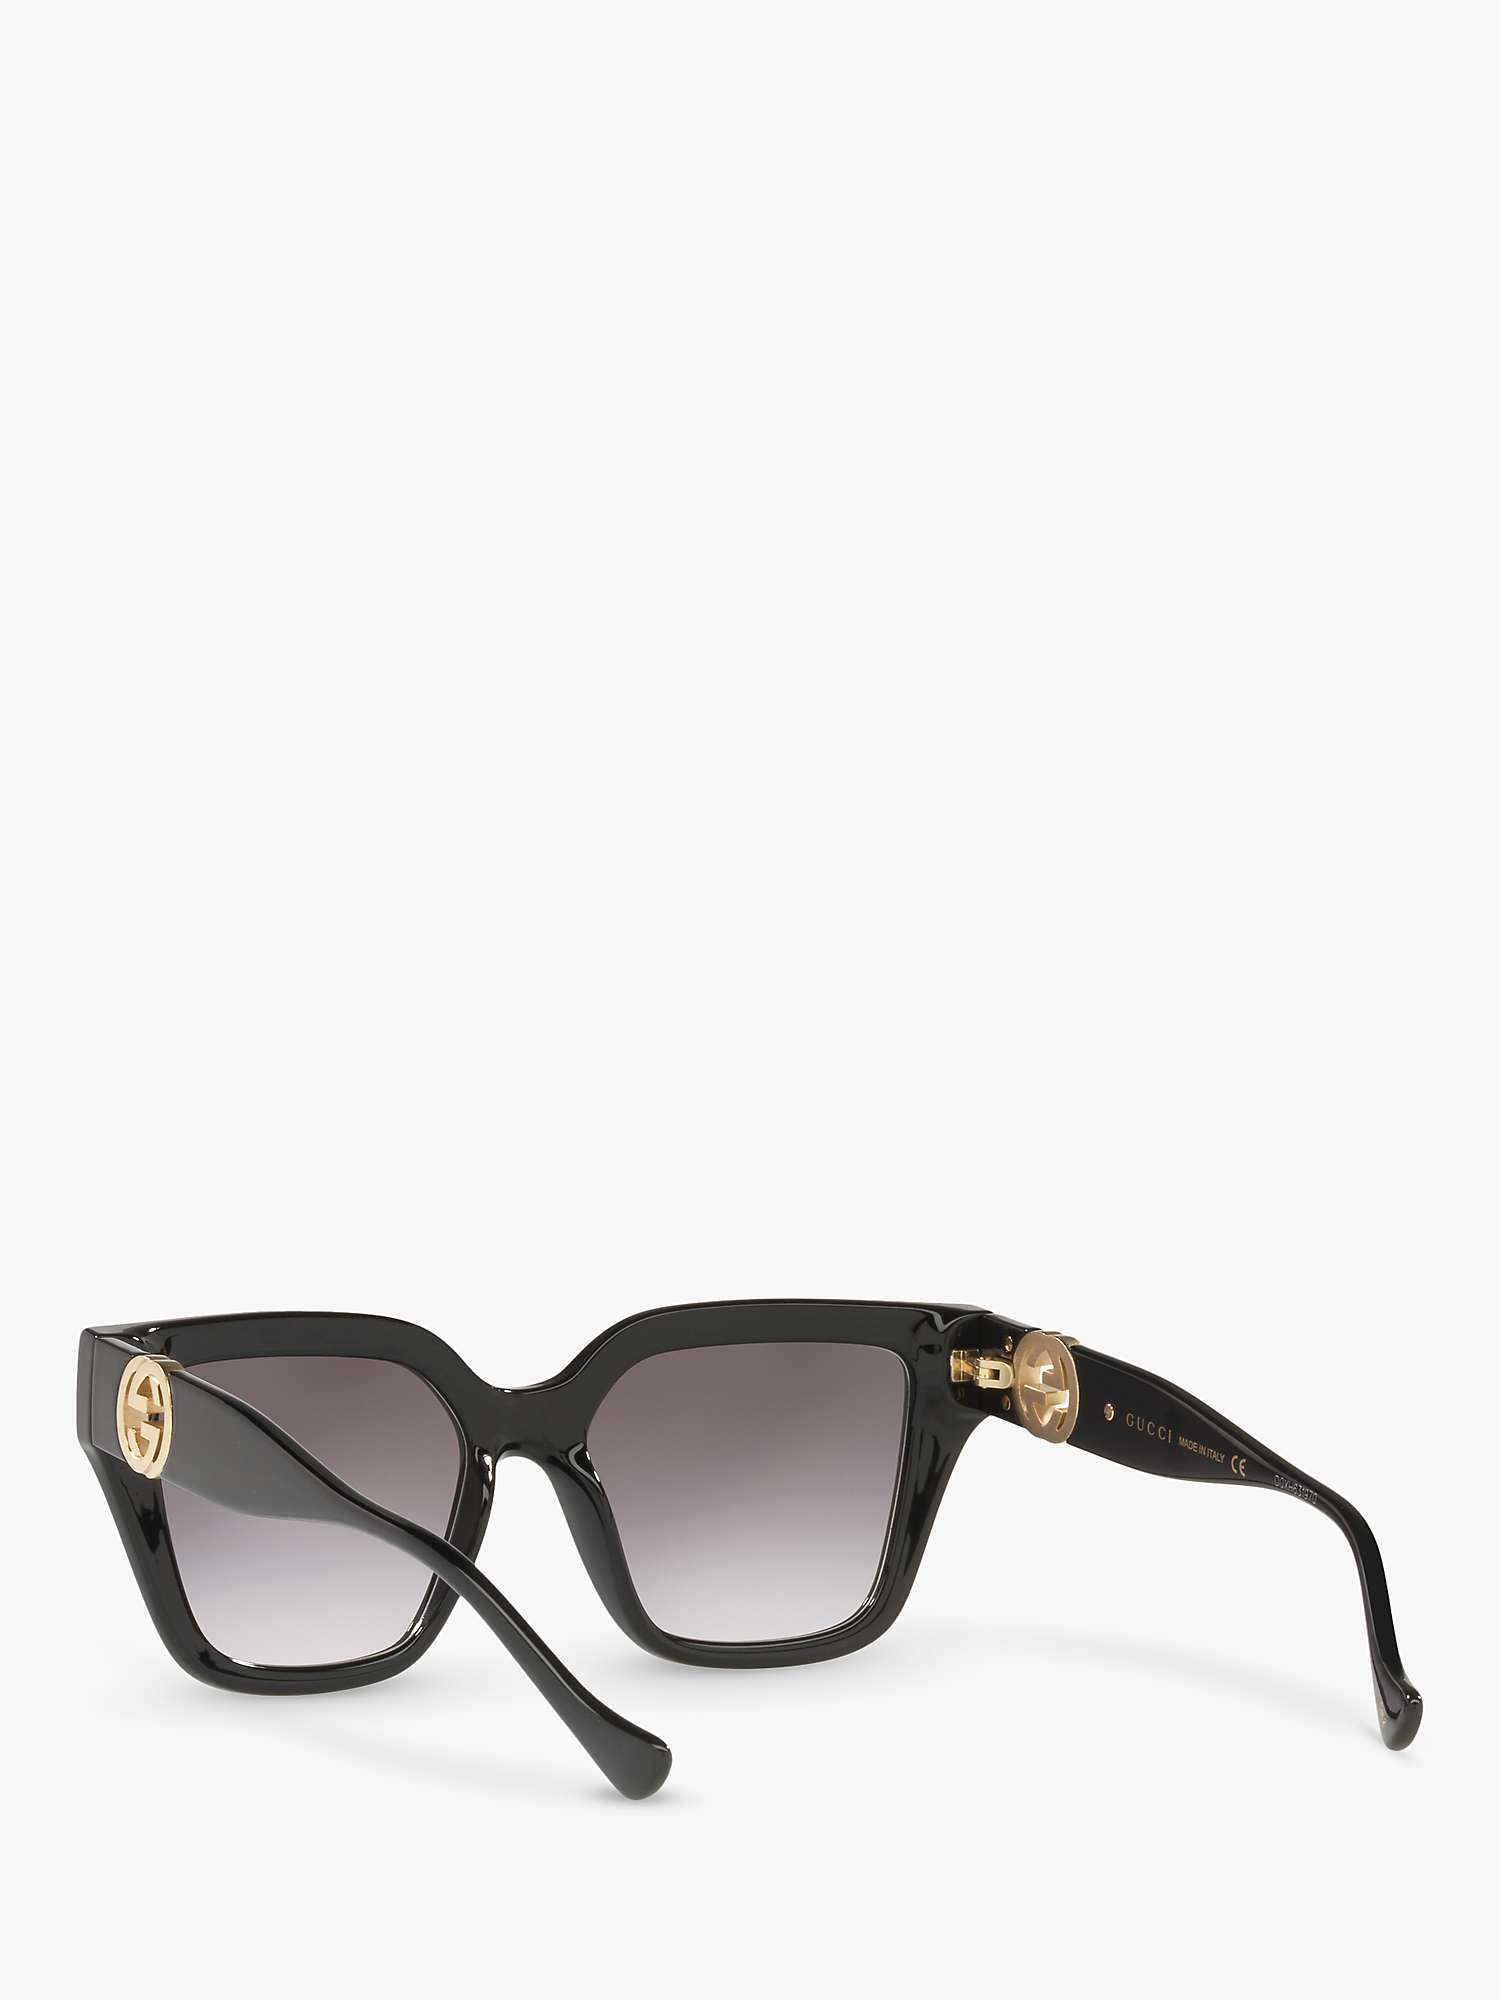 Buy Gucci GG1023S Women's D-Frame Sunglasses, Black/Grey Gradient Online at johnlewis.com